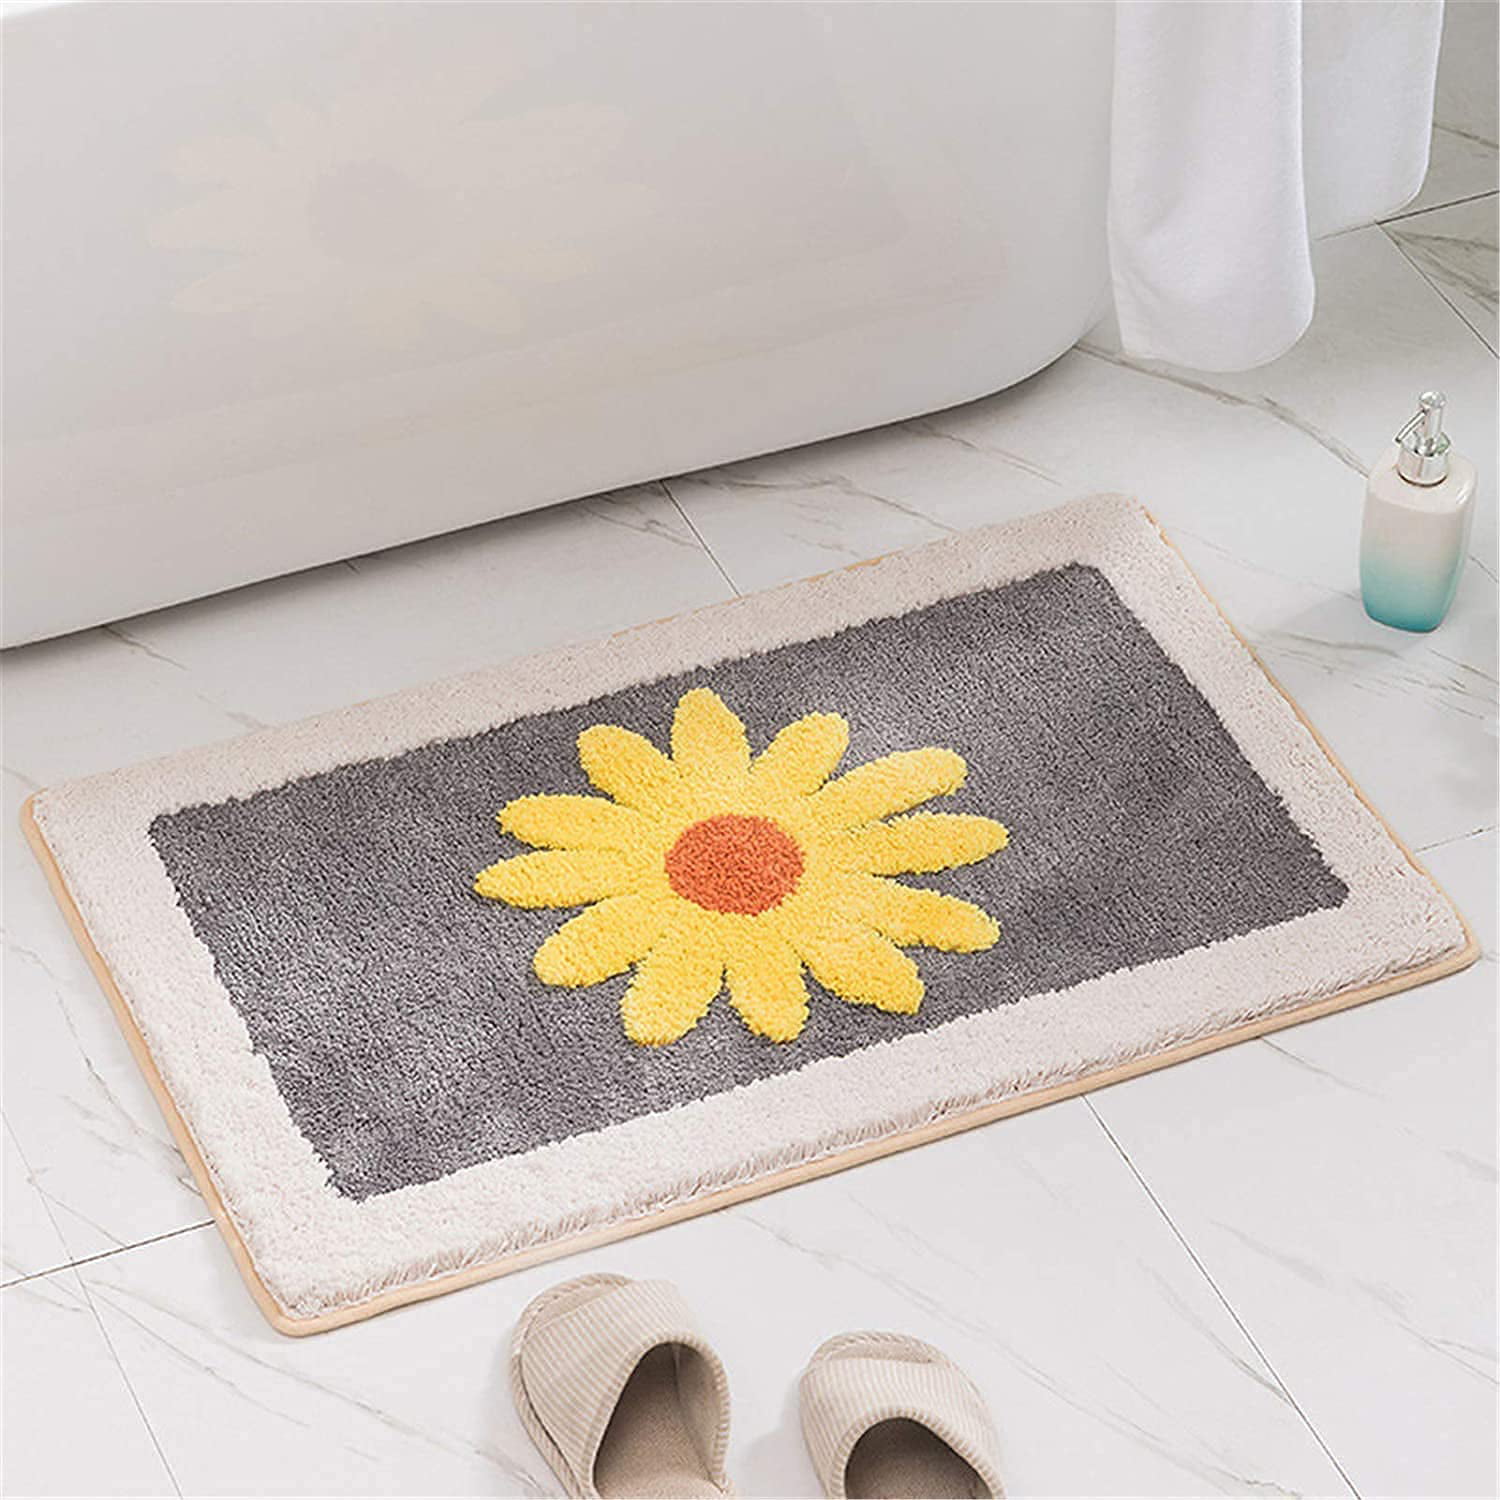 Soft Machine Washable Non-Slip Bathroom Toilet Floor Mats Rugs Flower Print 